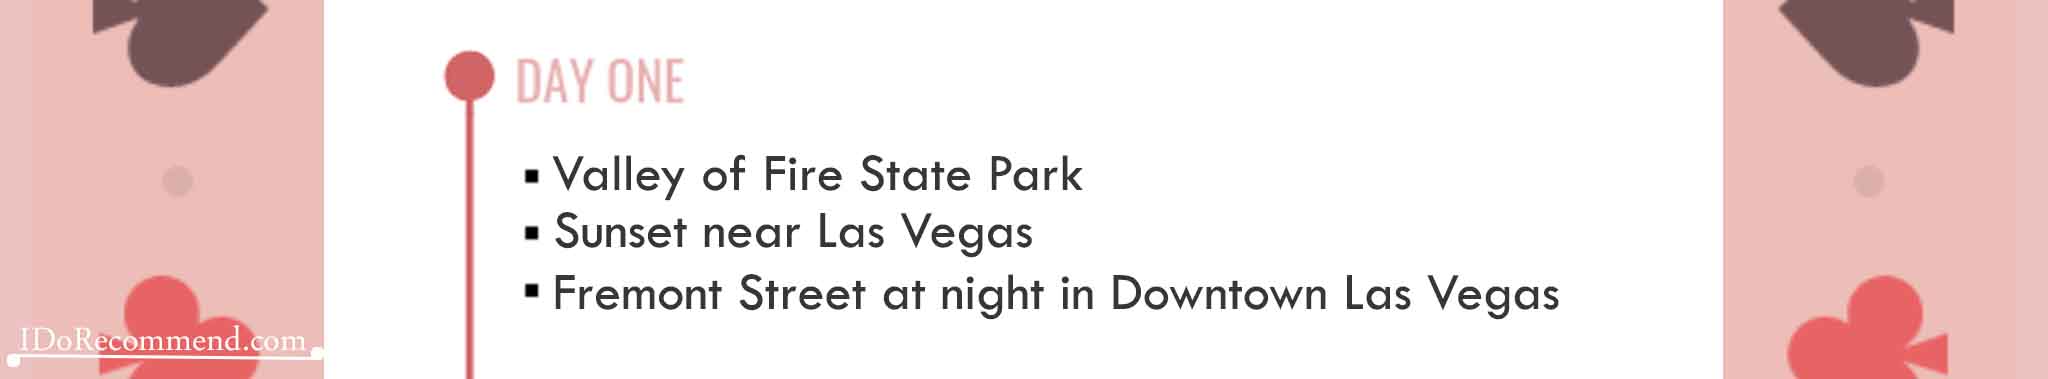 Las Vegas itinerary day 1